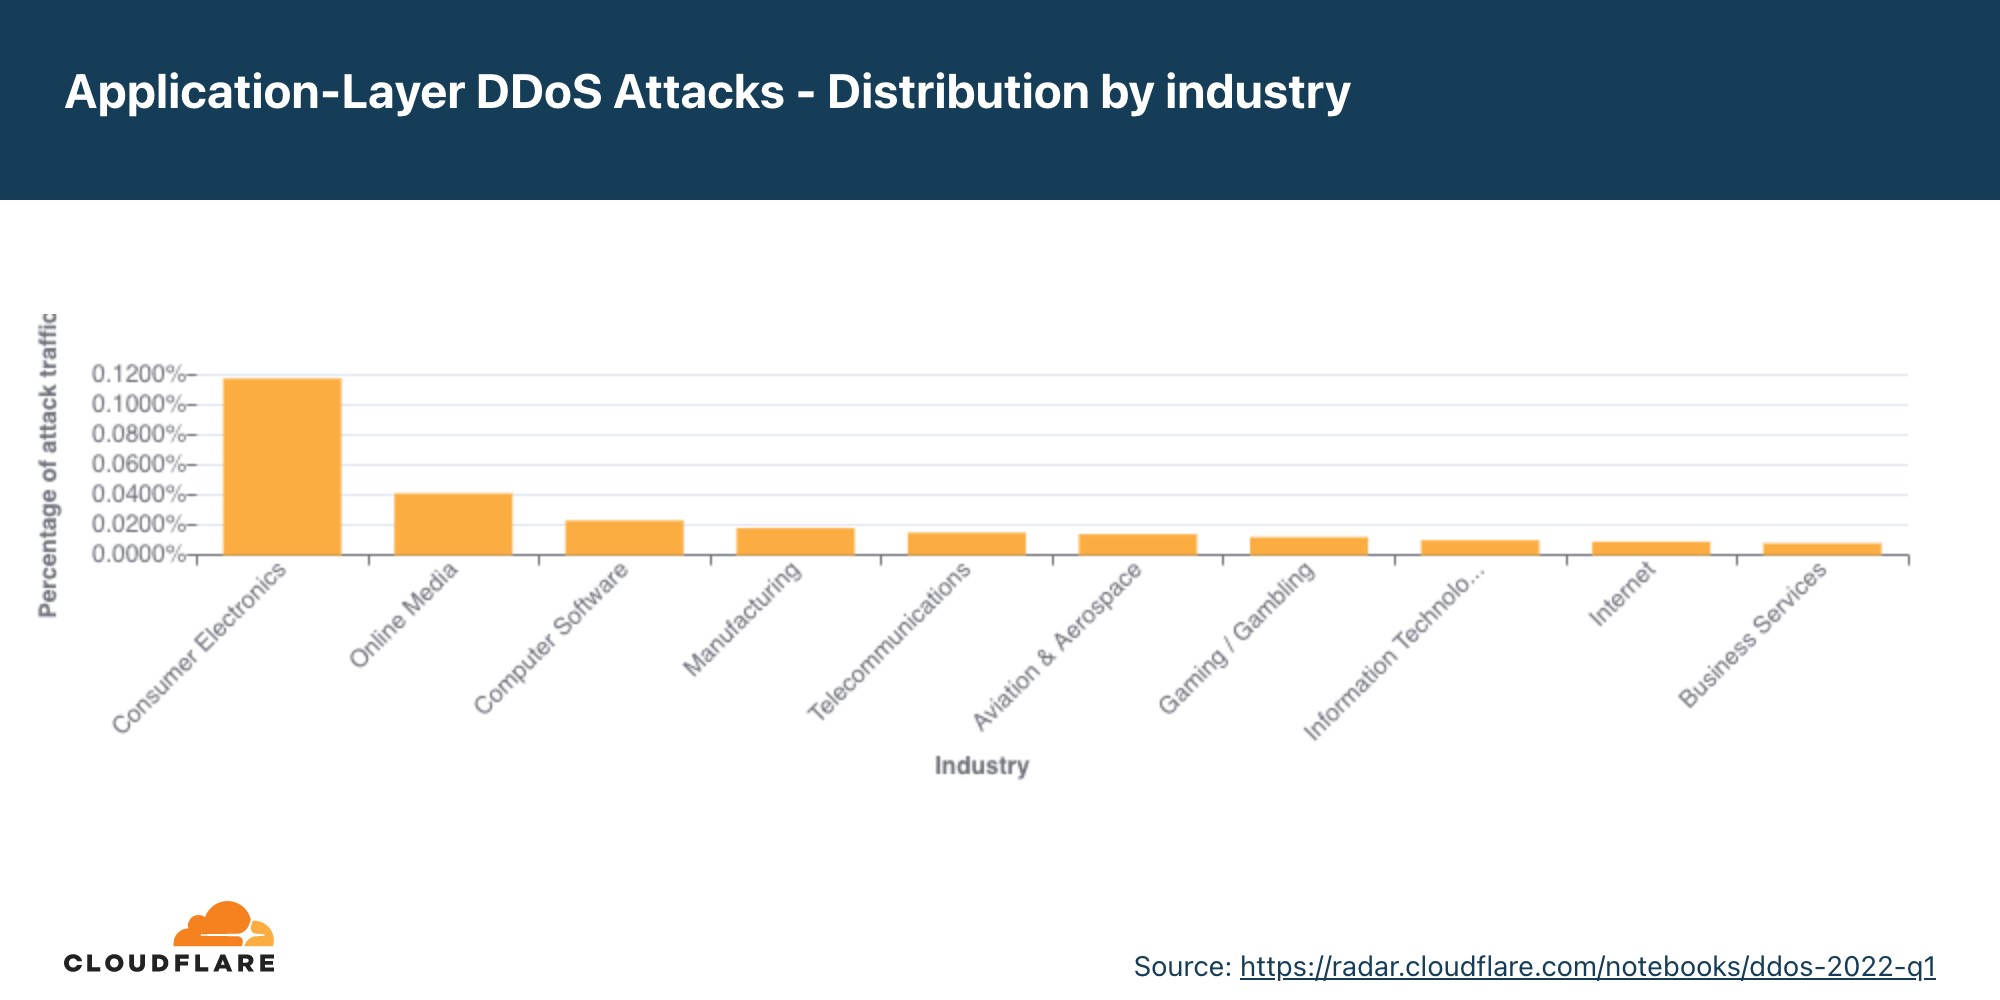 Ransomware DDoS attacks